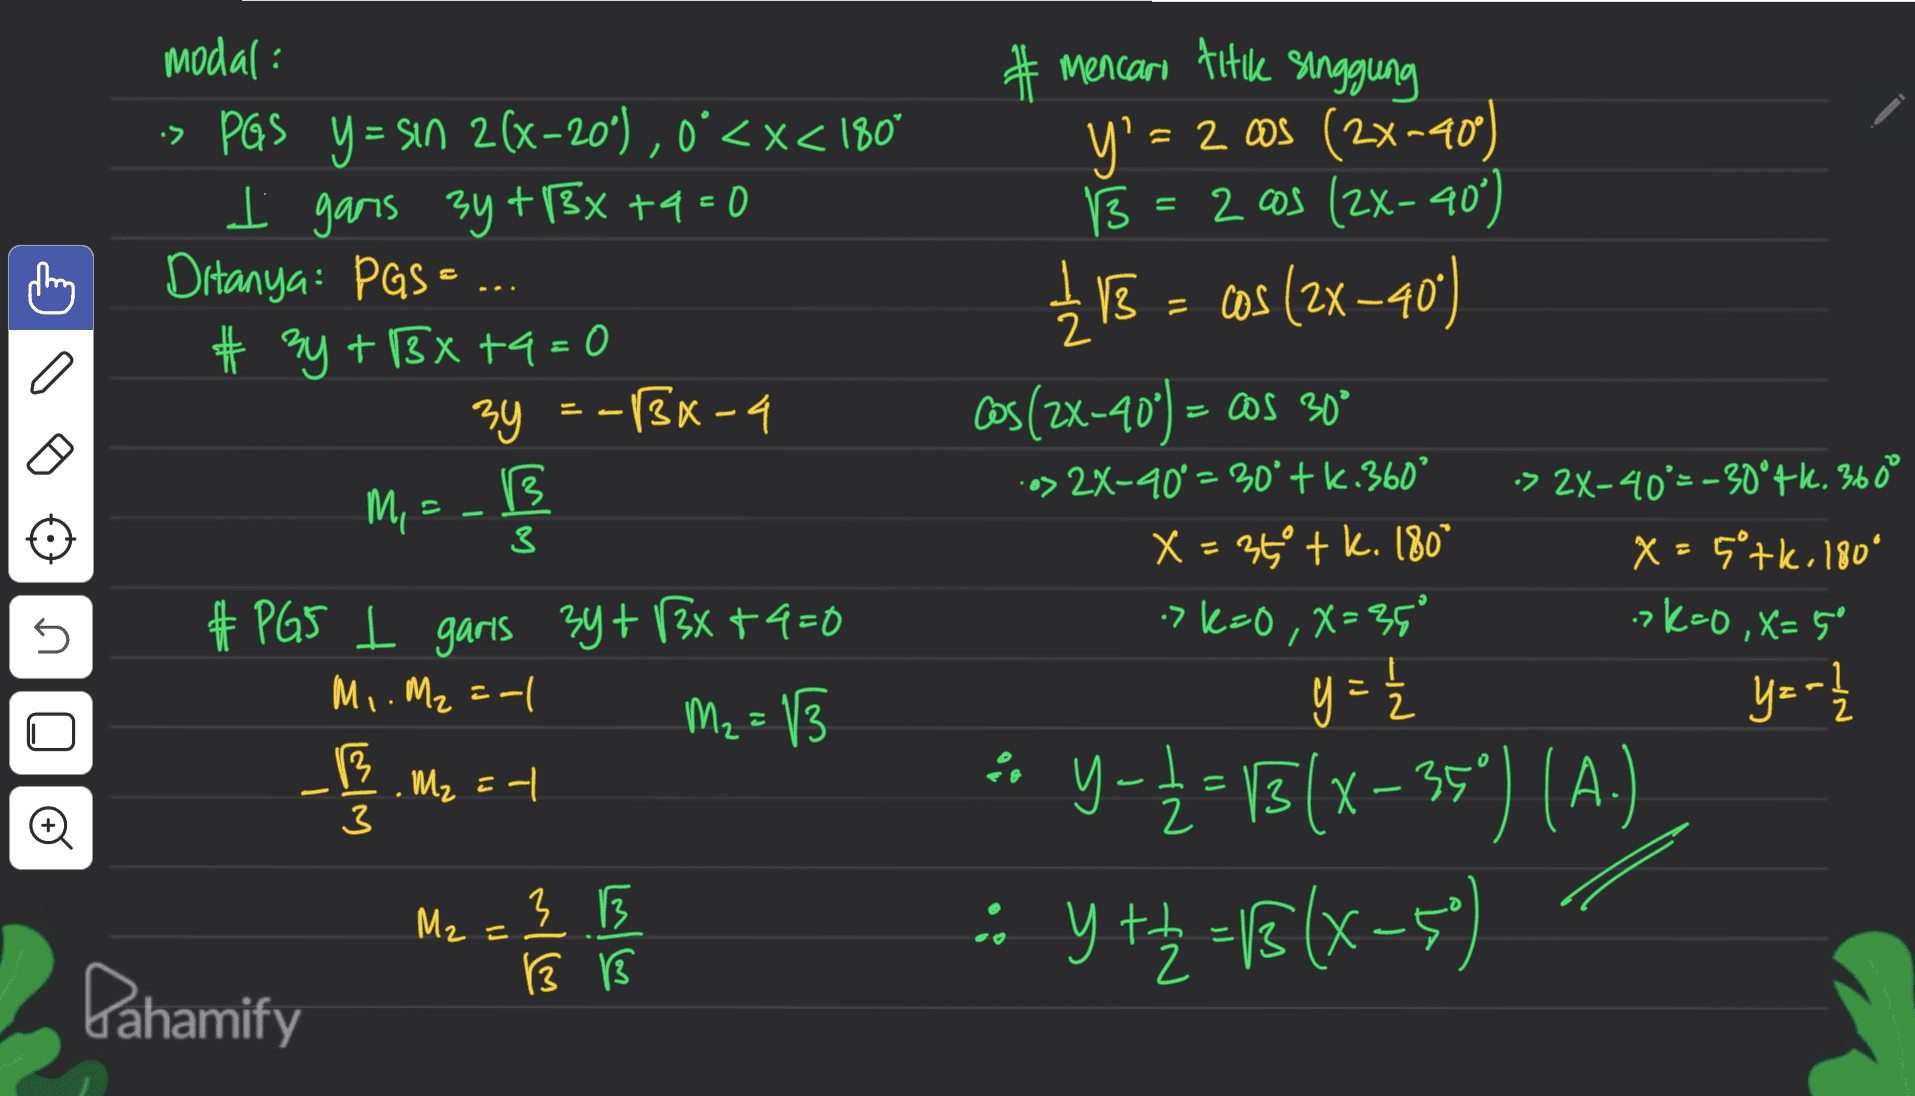 2 modal: > PGS Y = sin 2(x-20°), 0<x< 180° I gans 3y + 3x +9=0 Ditanya: PGS... # 3y + 138 +9=0 3y =-1Bx-a B # mencari titik singgung y' = = 2 cos (2x=40) ° B = 2 cos (2X-40) 士 118 = = cos (2x -40) Cos (2X-40°) – oos 300 --> 2X-40° = 30° tk.360° •> 2X-40°=-30°+k. 360° X = 350 tk. 180° x=5°tk. 180° -> k=0 ,X=35° = Mos 3 >k=0, x=5° U # PG5 l garis 3y + 3x +4=0 Mi. M2 = -1 M2 = 13 M₂ =-| ( y = 1 2 y=-2 / Qlo wiw ° 2 3 - y-4-15(x - 35°) (A.) : Y ++ 2 = f (x-5) M2= 3 B 13 13 Pahamify 